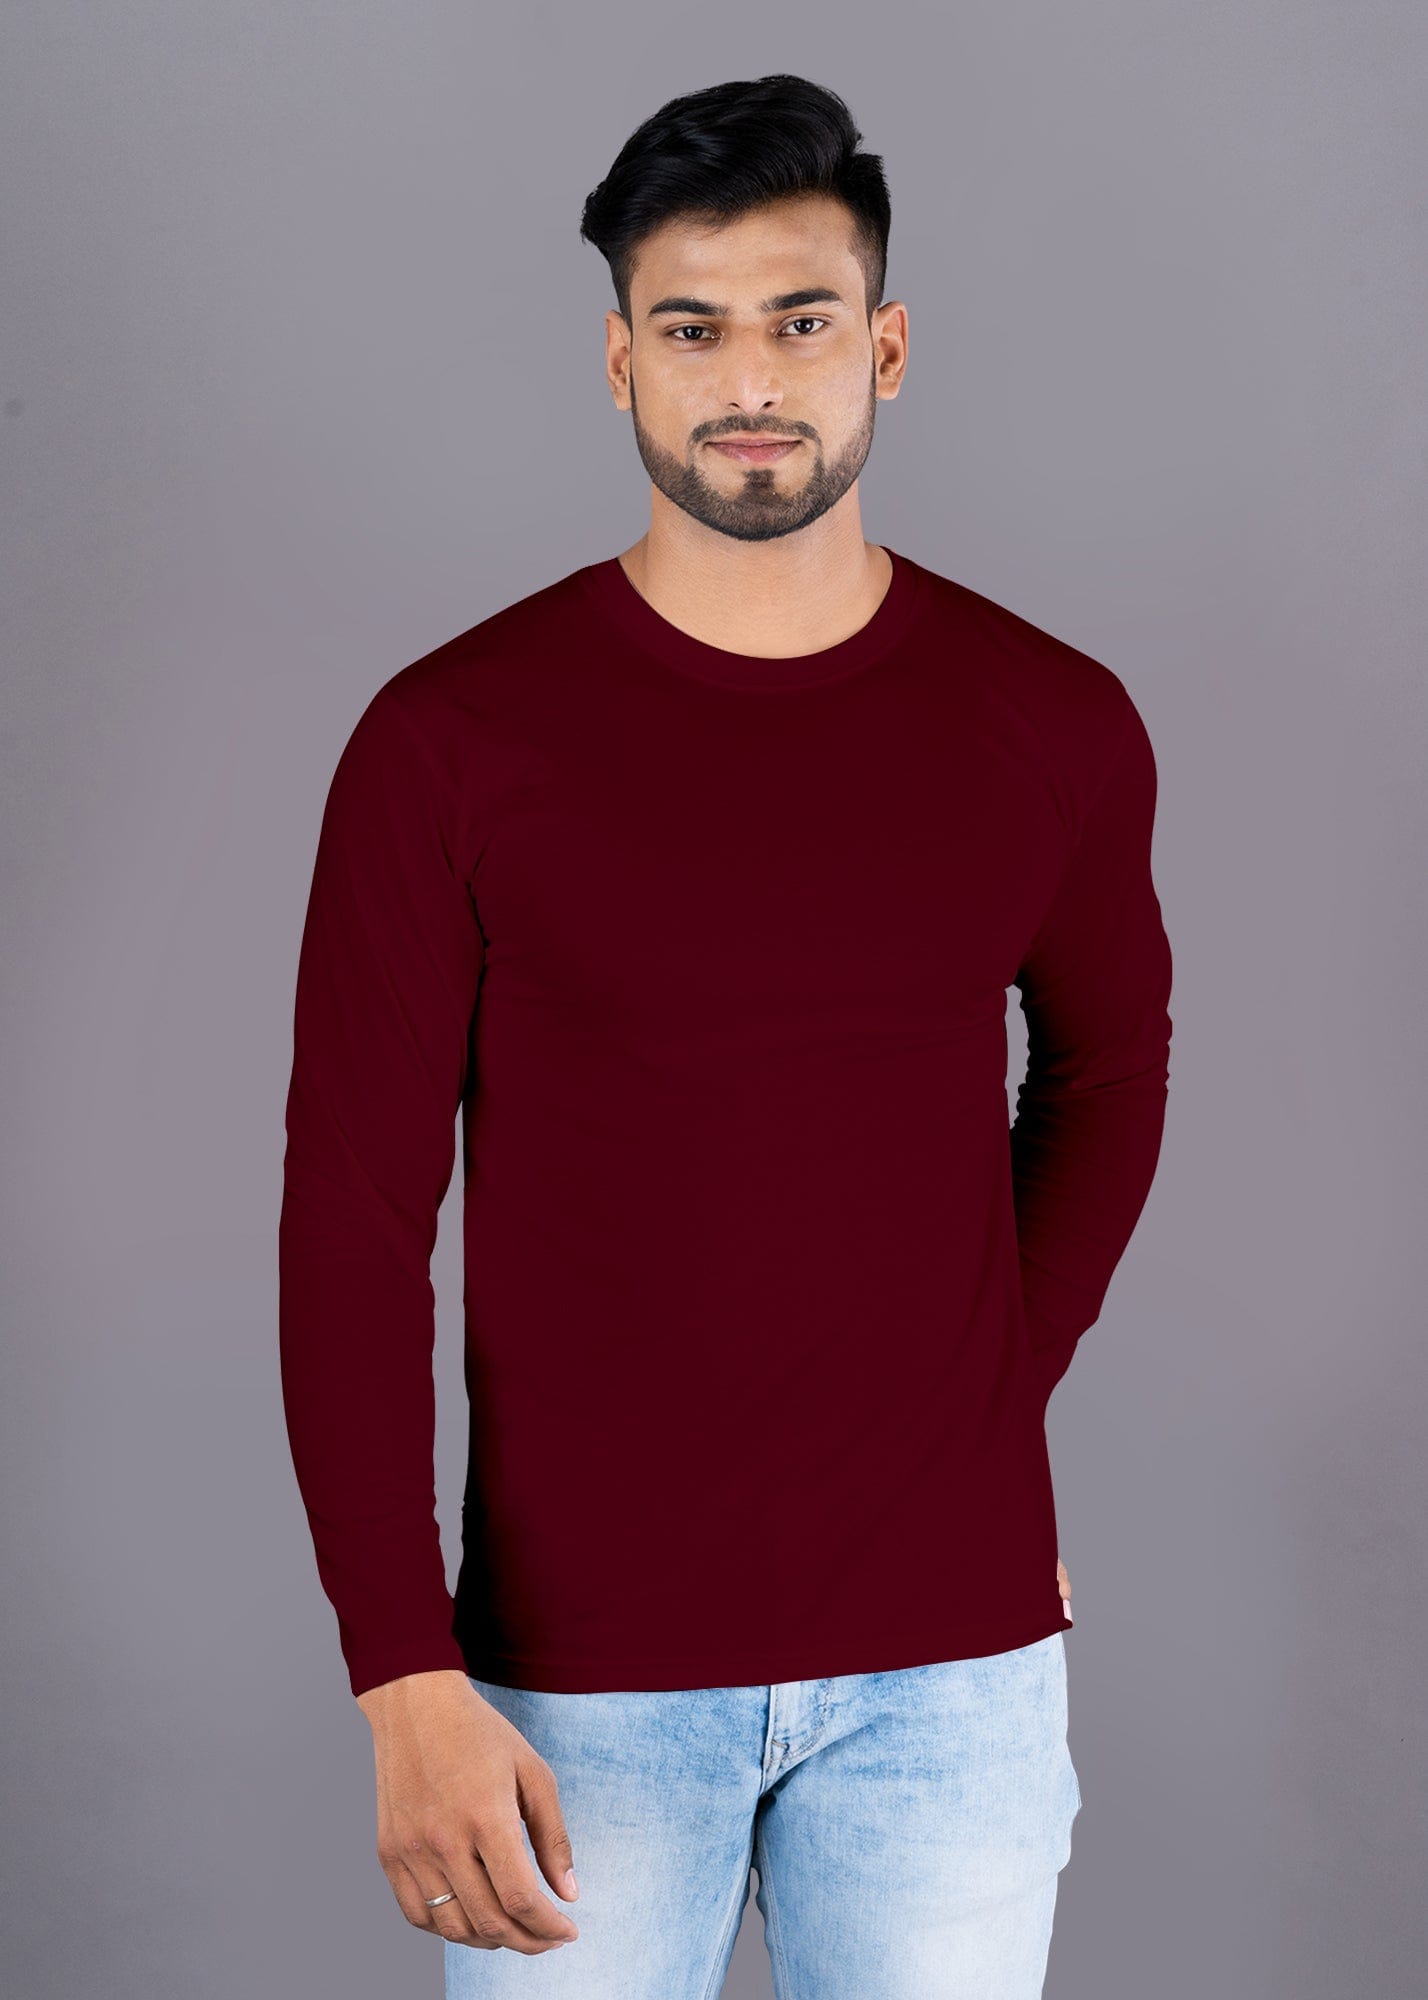 Solid Full Sleeve Premium Cotton T-Shirt For Men - Pack Of 3